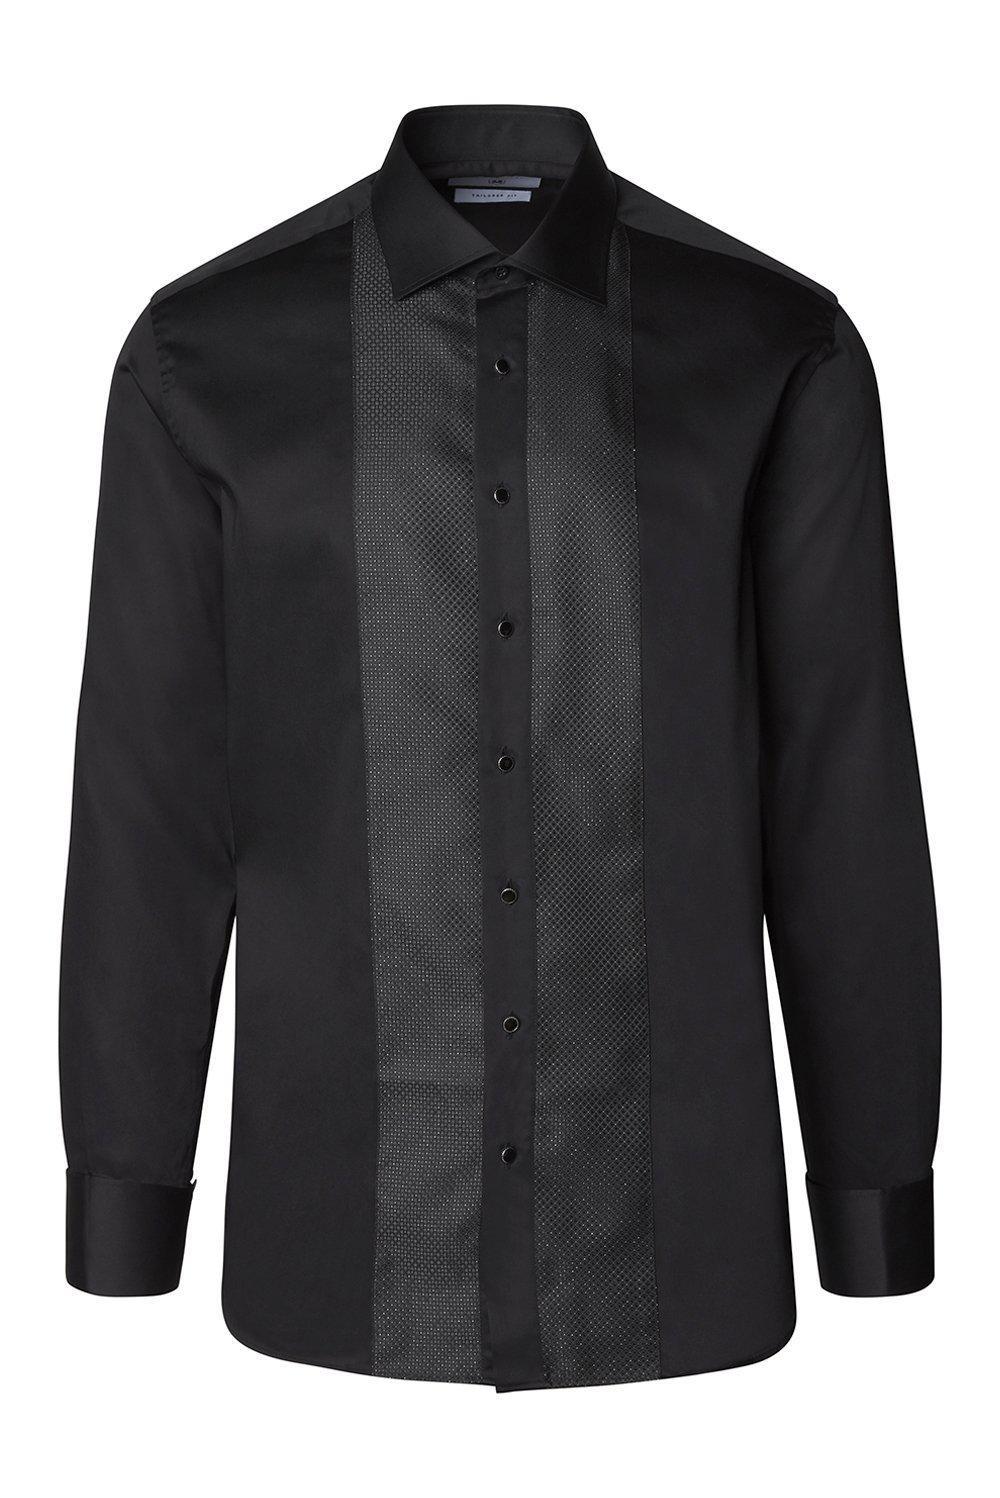 Lurex Paneled Spread Collar Tux Shirt - Jet Black - Ron Tomson